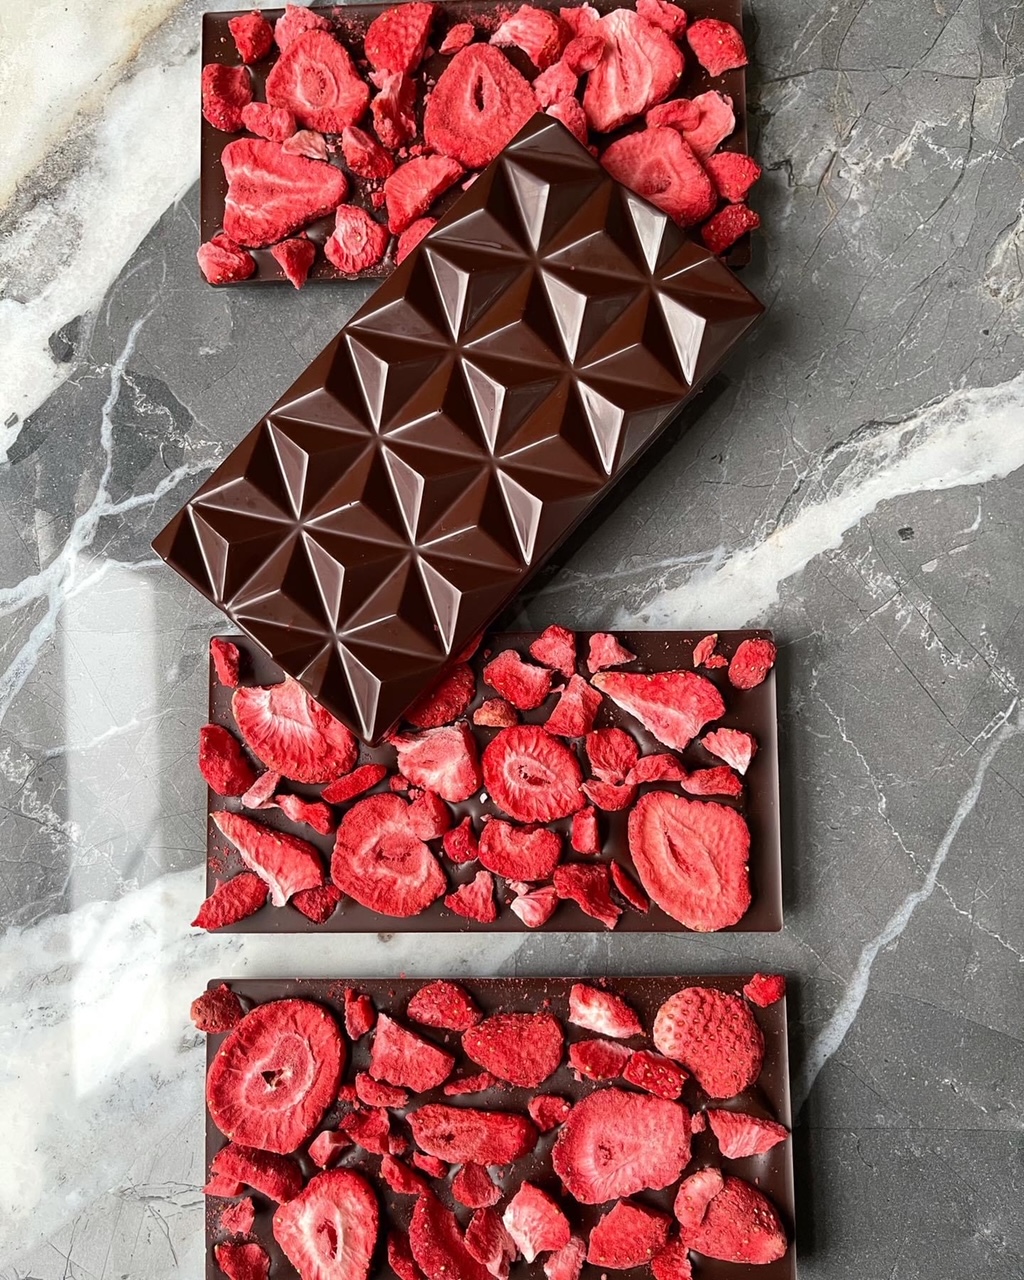 The Raw Confectionery, The Raw Confectionery is Creating Unique Handmade Chocolate Confections